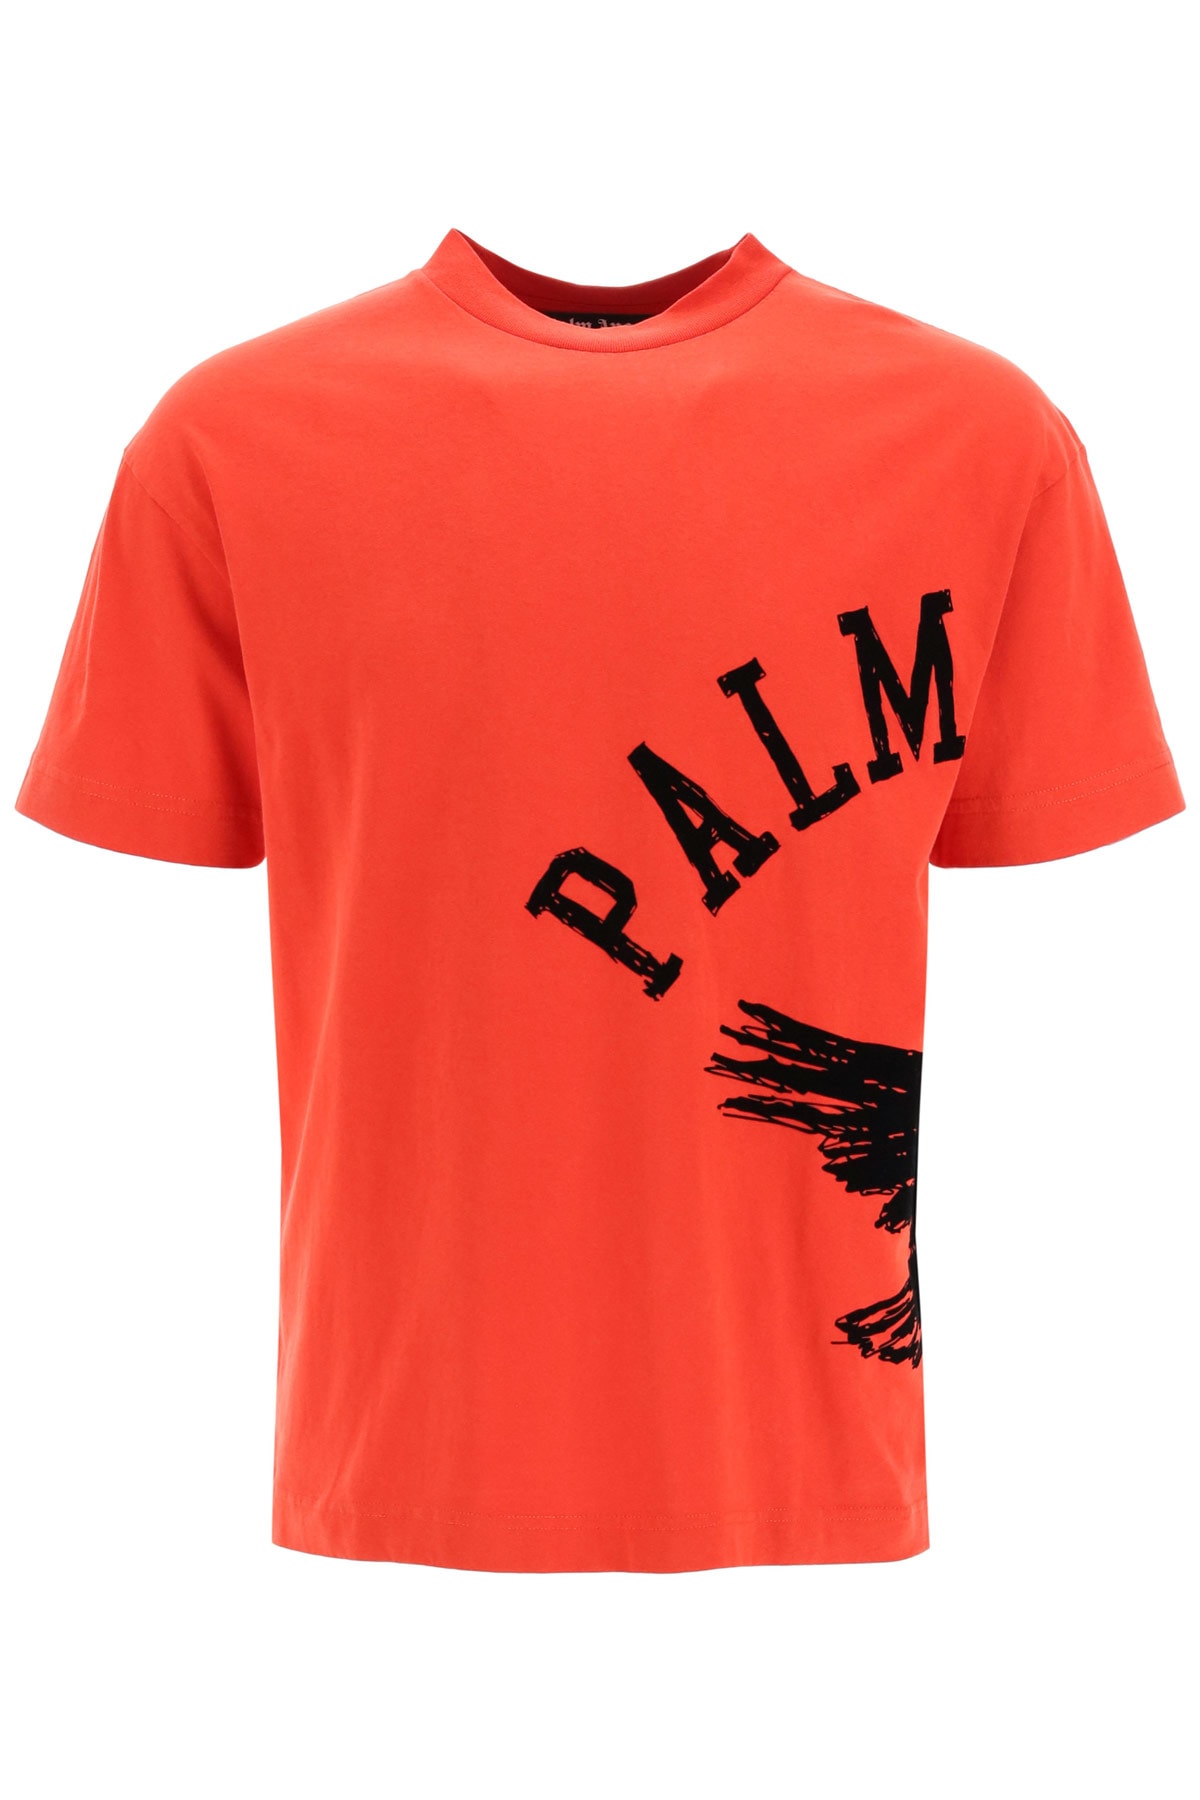 Palm Angels Side College Eagle Flock T-shirt